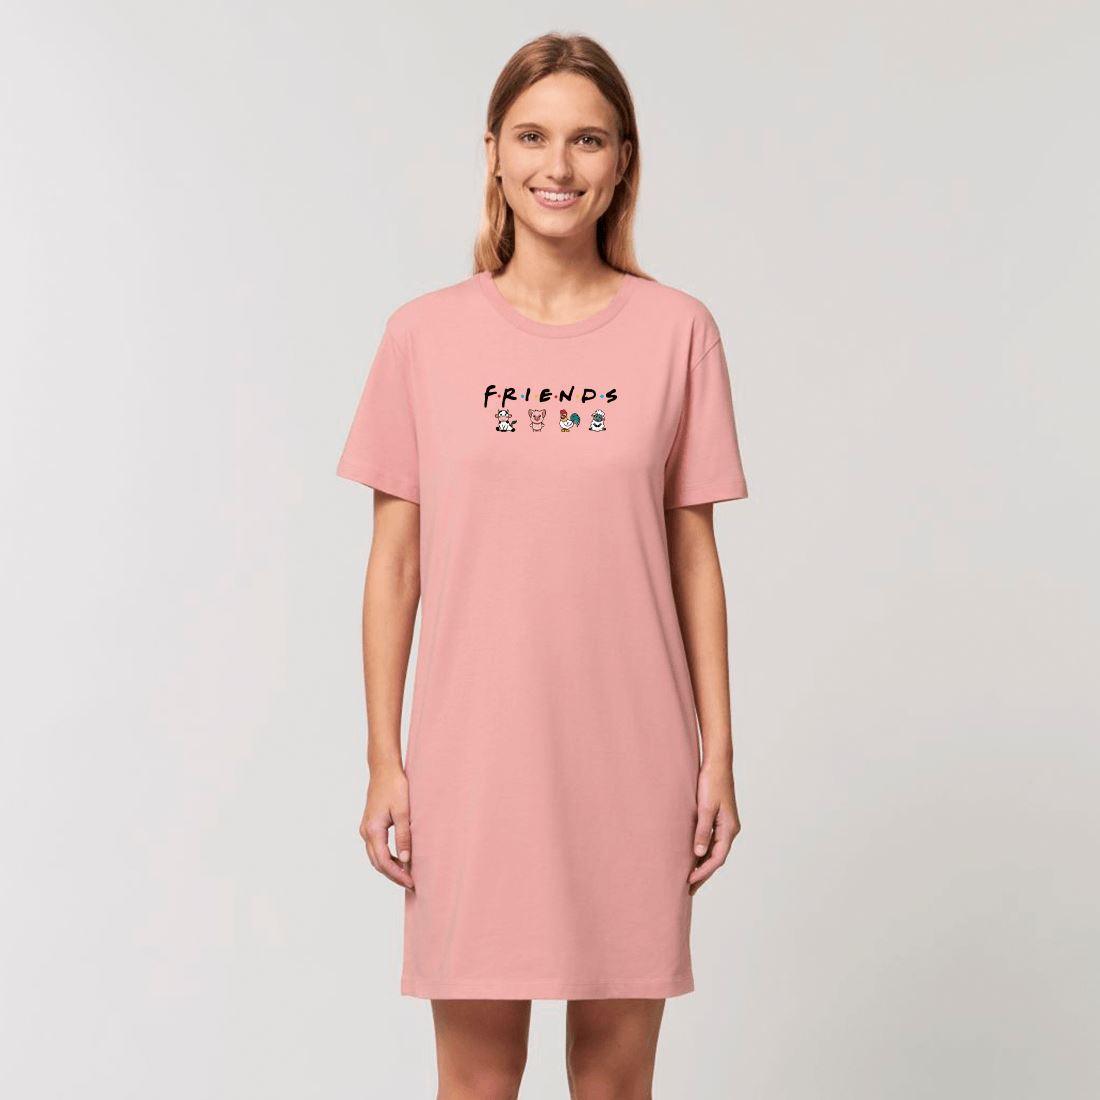 Friends - T-Shirt Kleid - Team Vegan © vegan t shirt